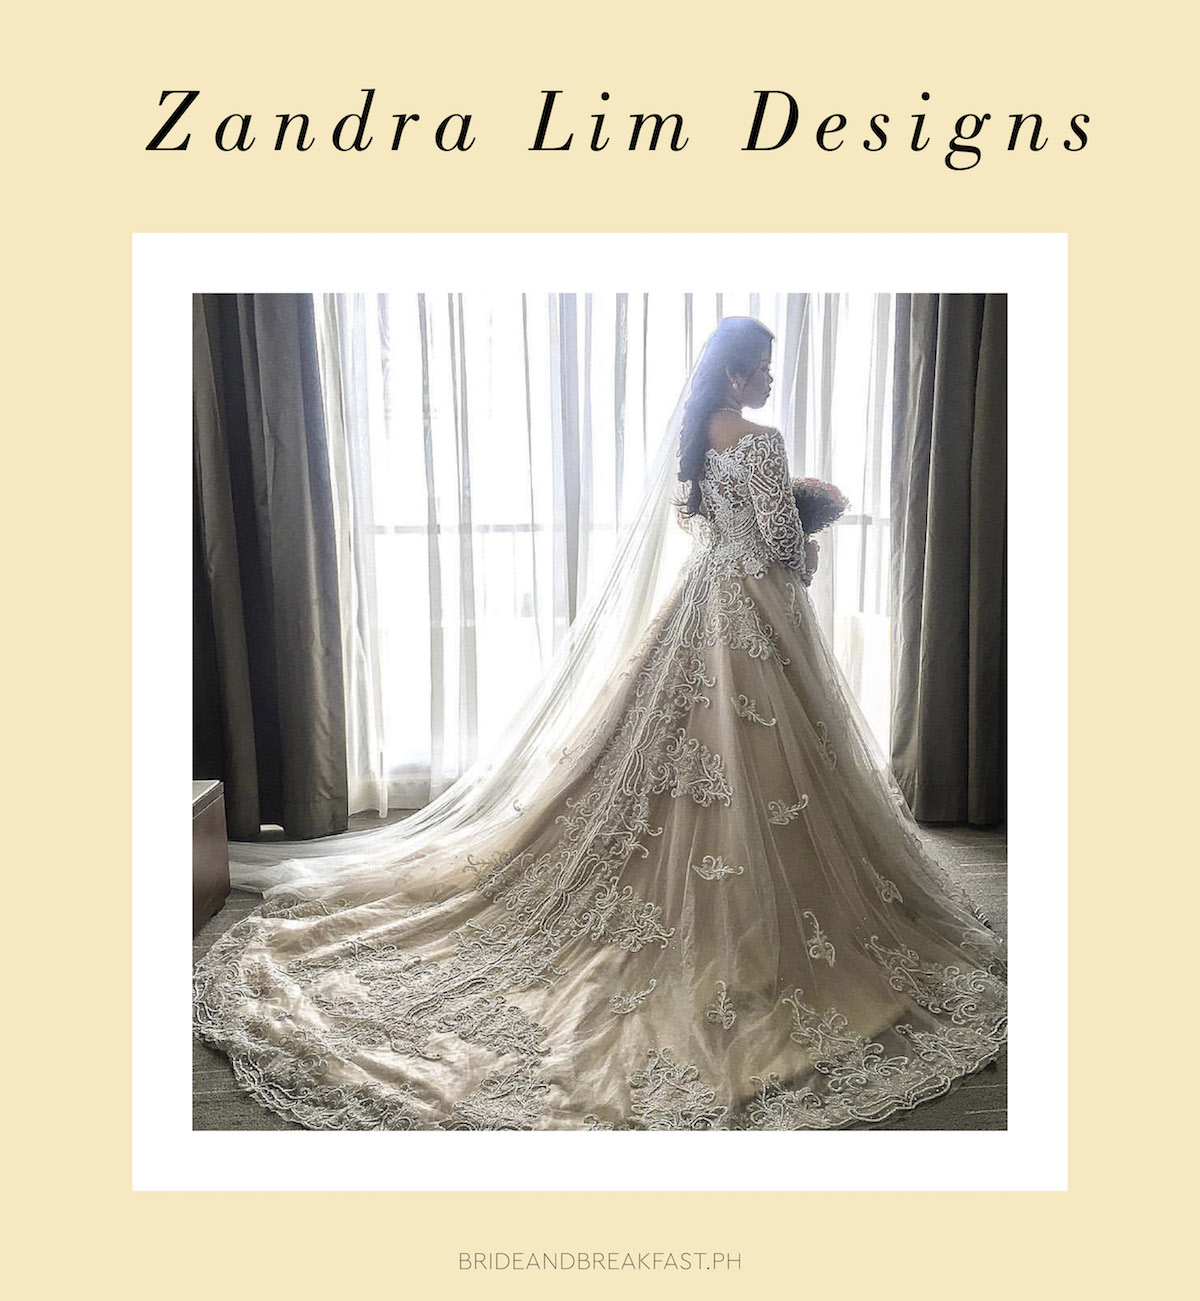 Zandra Lim Designs